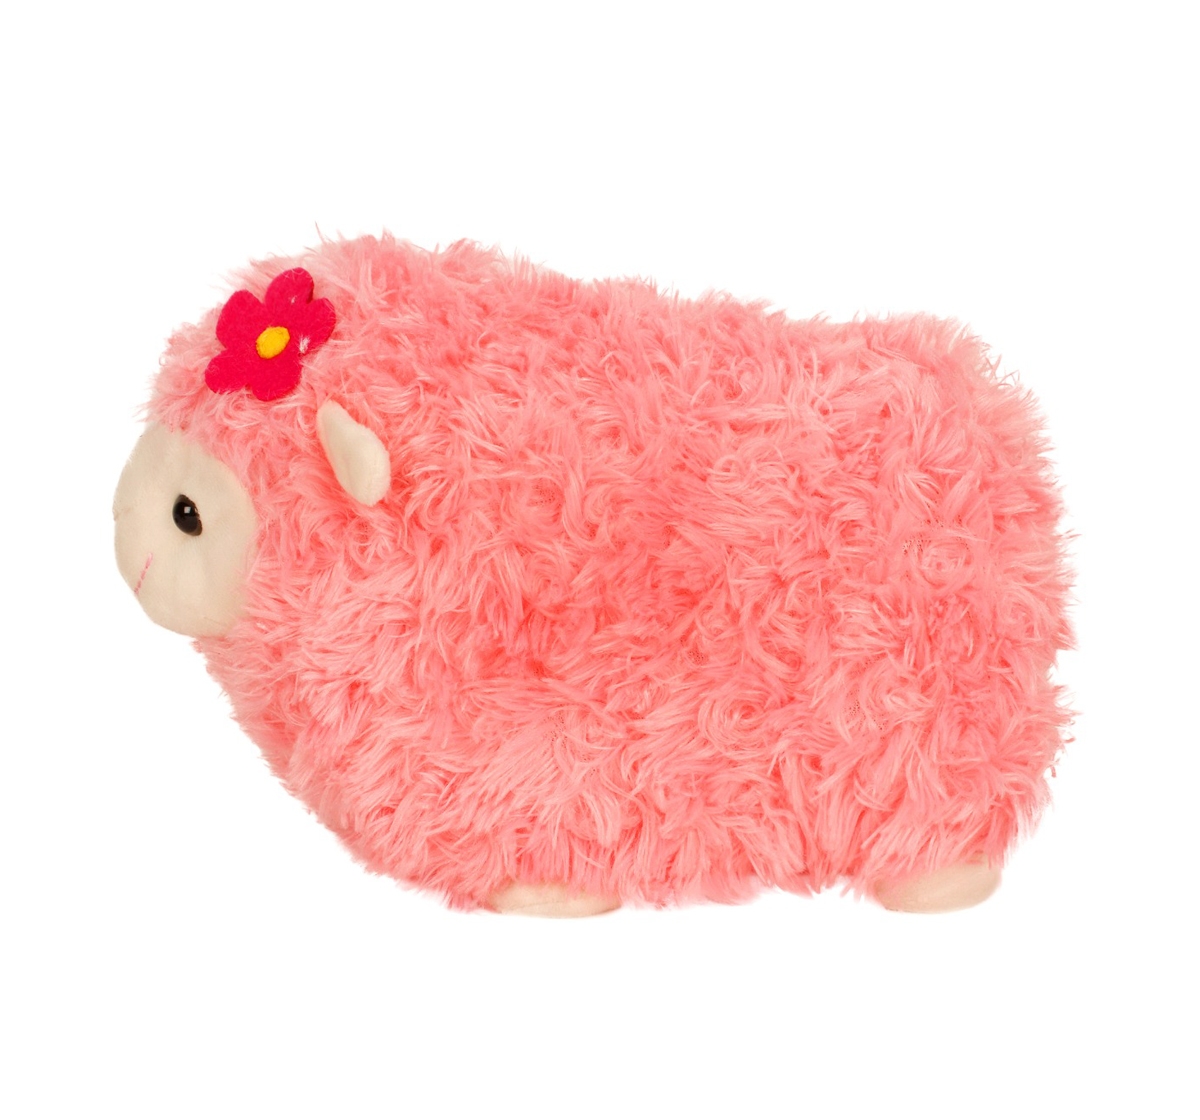 Fuzzbuzz | Fuzzbuzz Pink Lamb Stuffed Animal - 28Cm Quirky Soft Toys for Kids age 0M+ - 20 Cm (Pink) 2